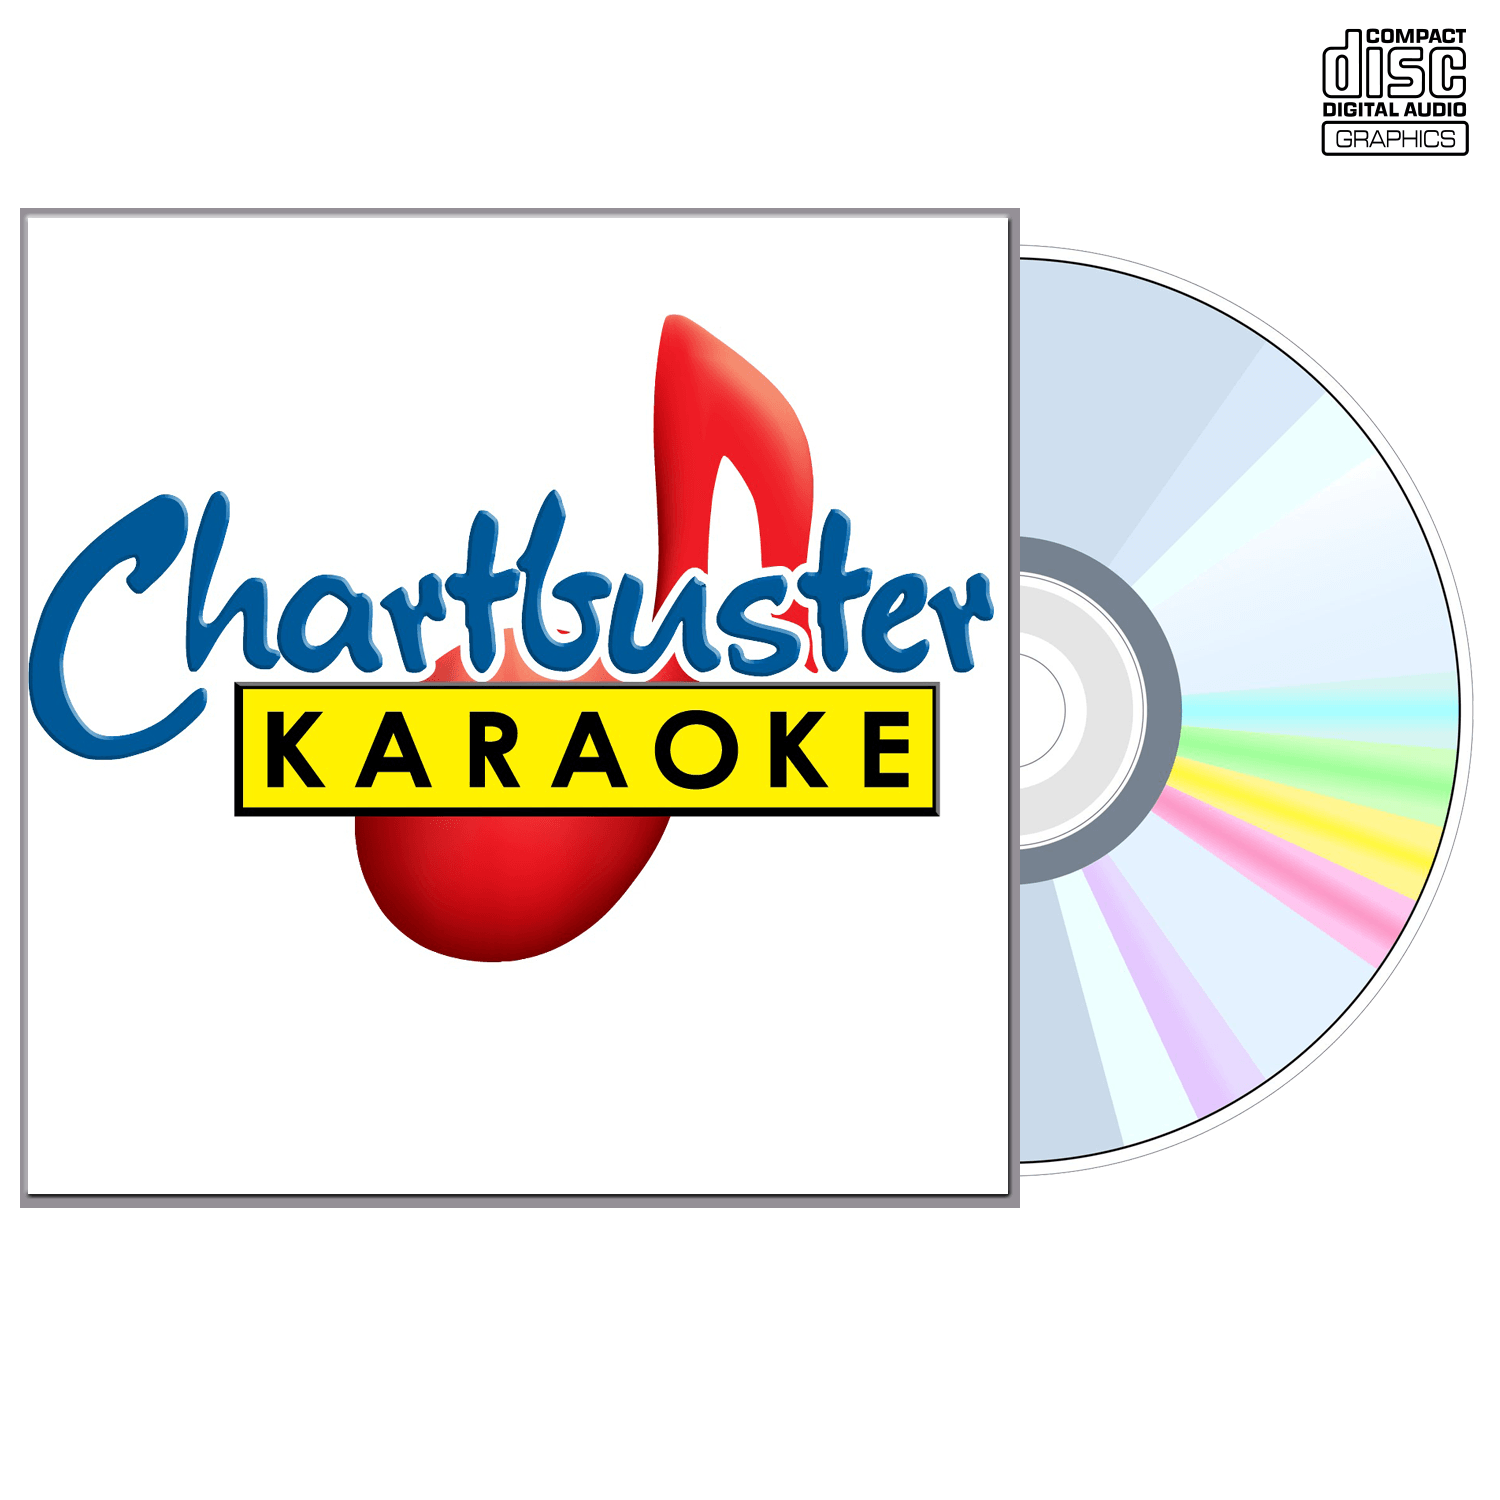 The Spinners - CD+G - Chartbuster Karaoke - Karaoke Home Entertainment